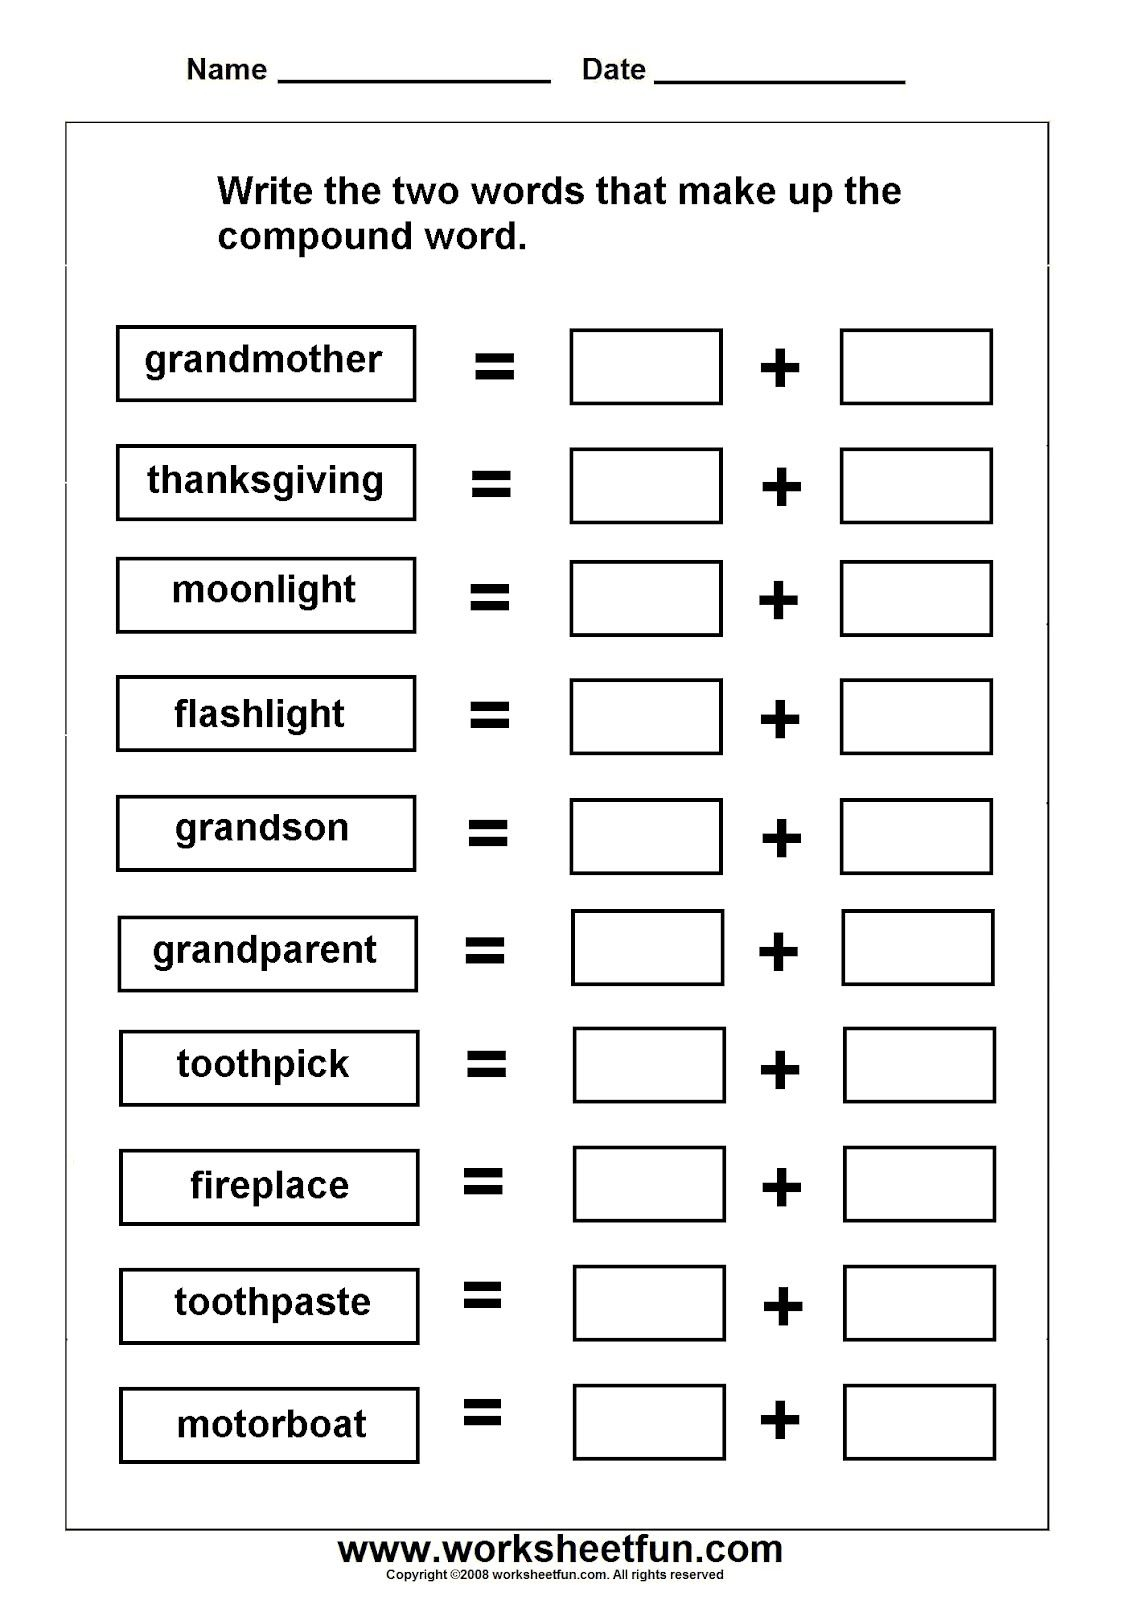 Worksheet Grandmother Thanksgiving Moonlight Flashlight | Free Printable Compound Word Worksheets